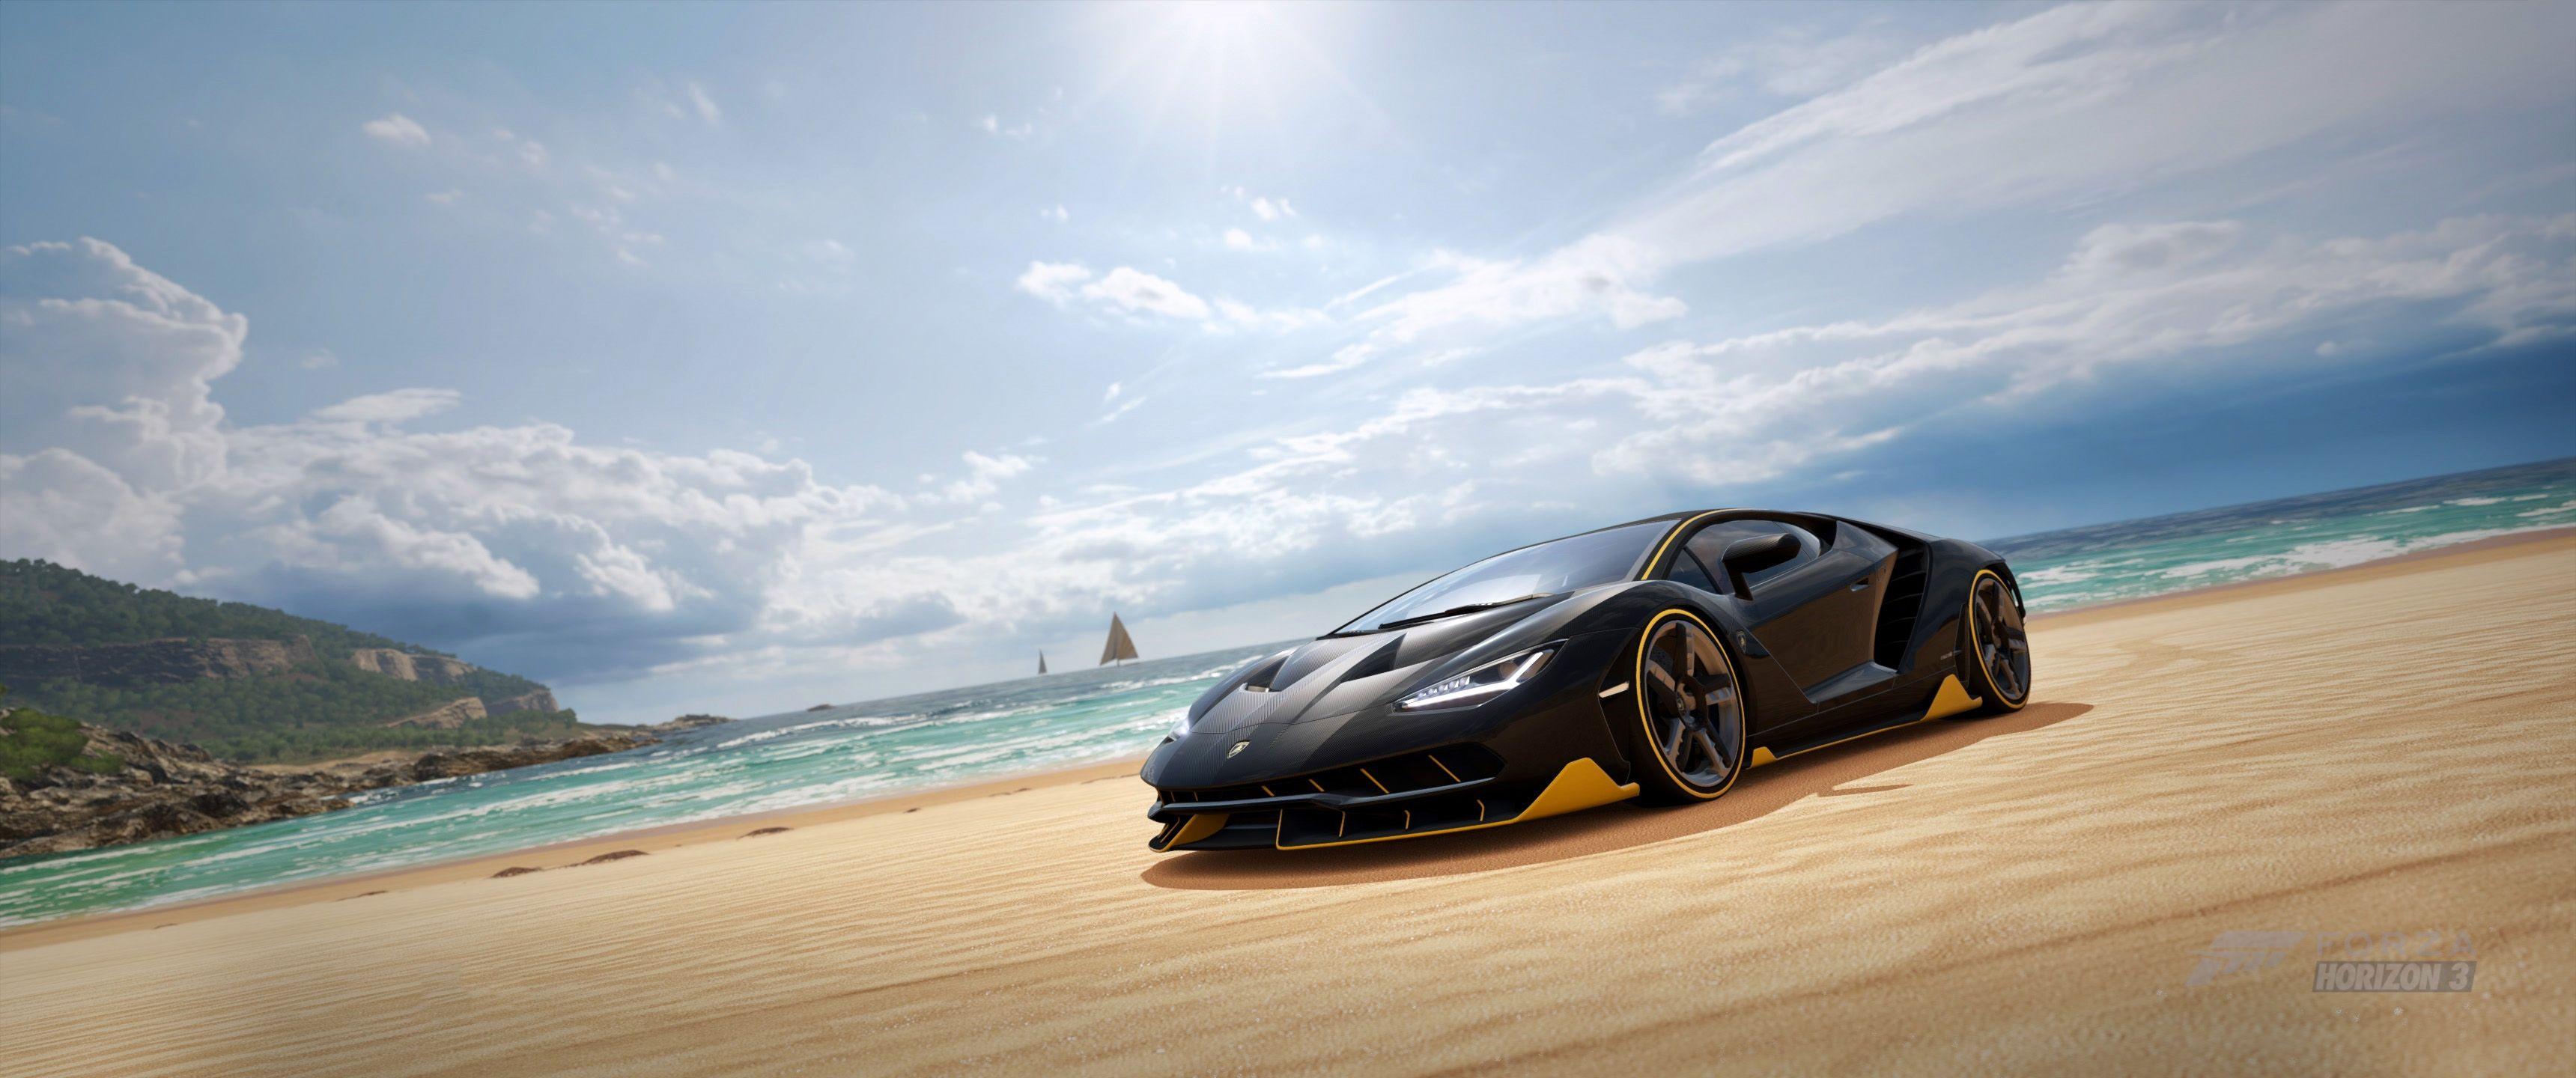 Forza Horizon 3 Wallpaper, Picture, Image